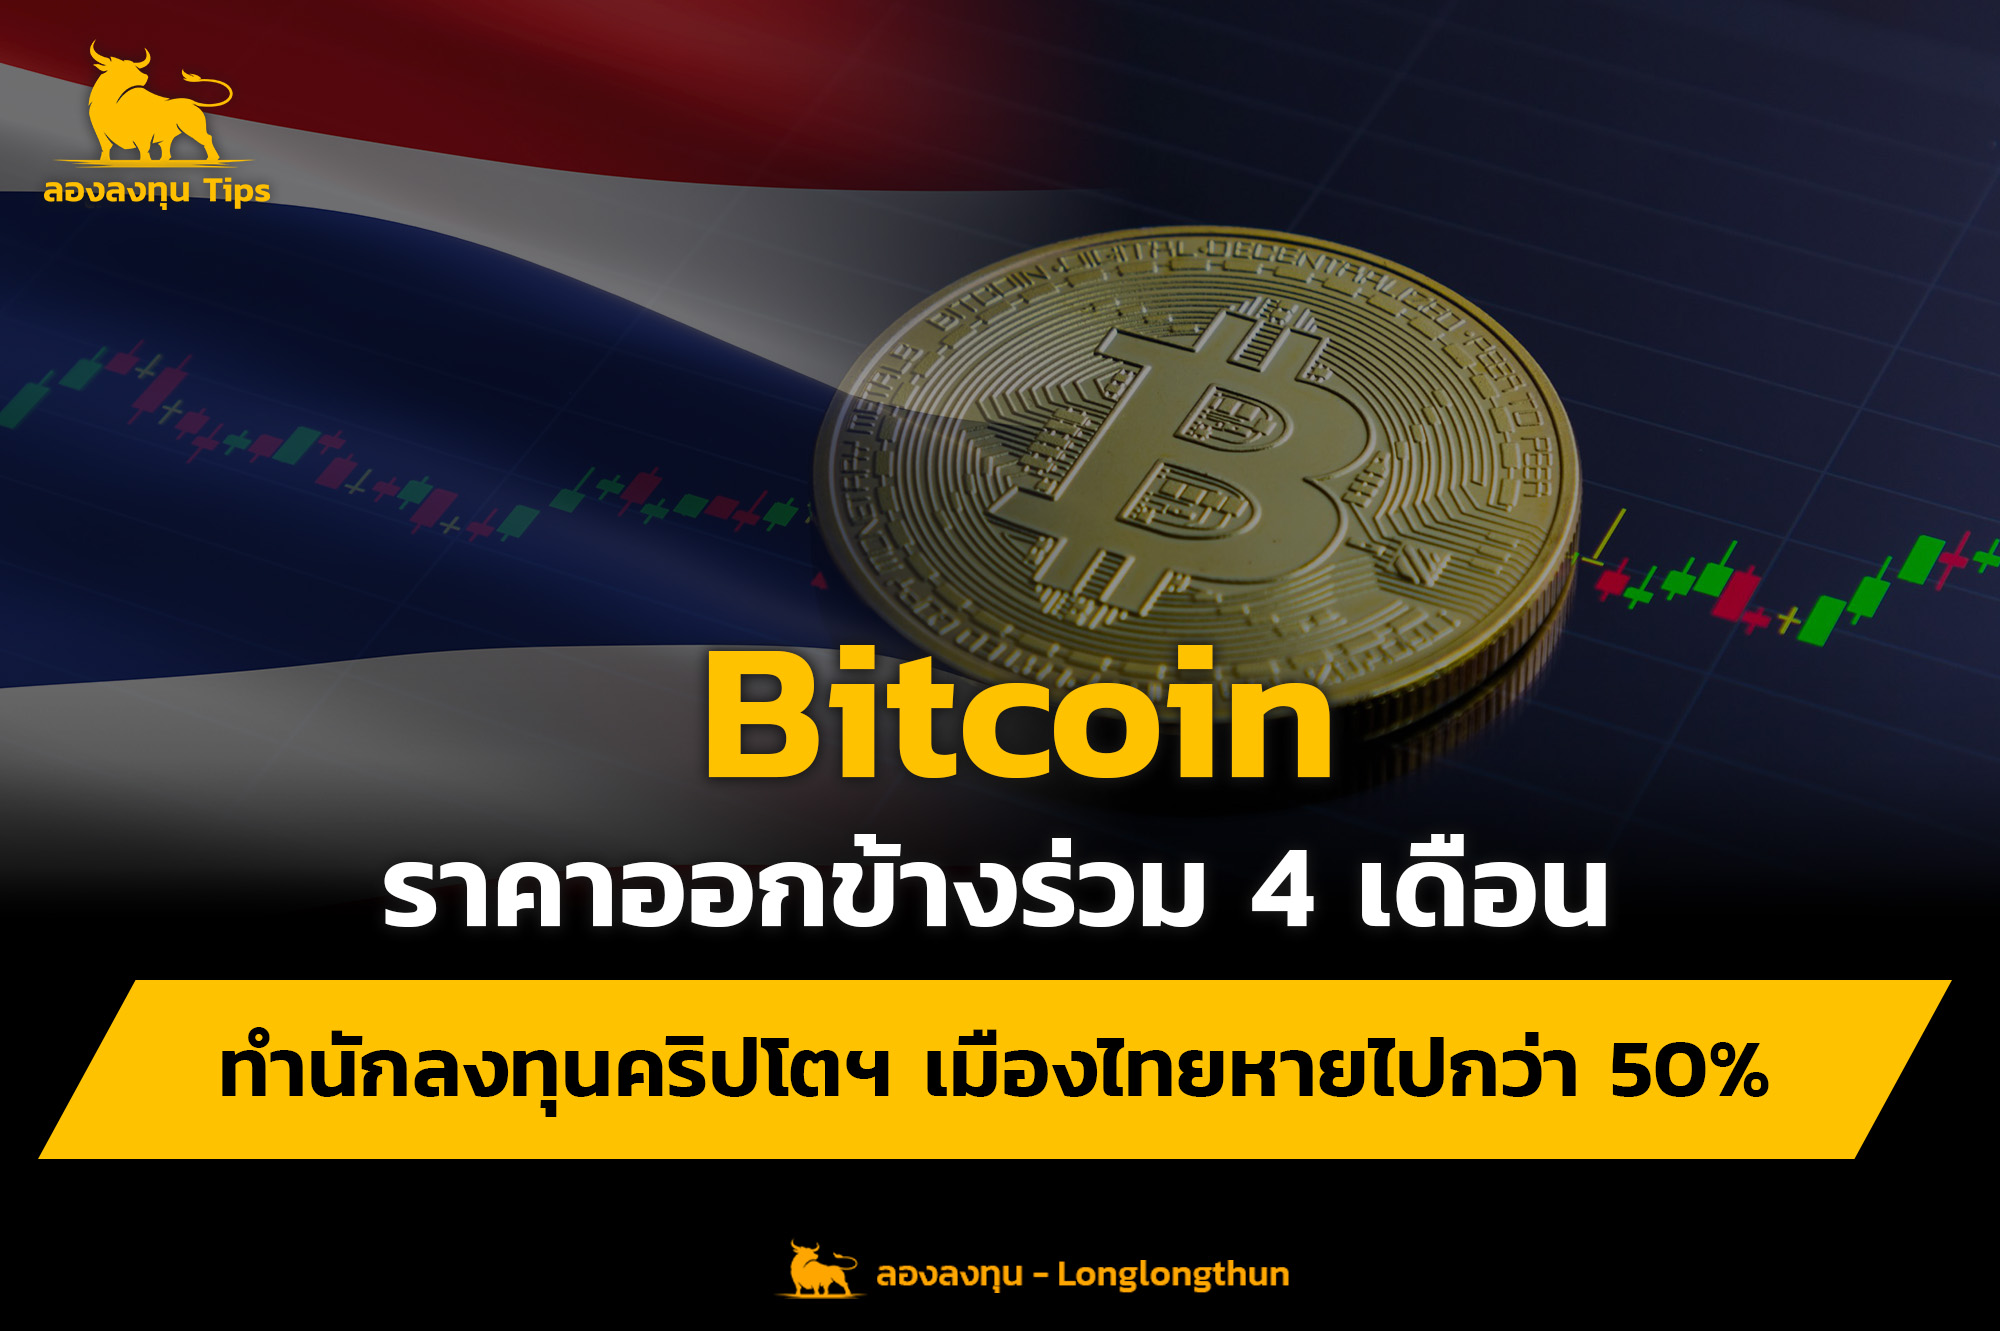 Bitcoin ราคานิ่ง ทำนักลงทุนคริปโตฯไทยหายร่วม 50%